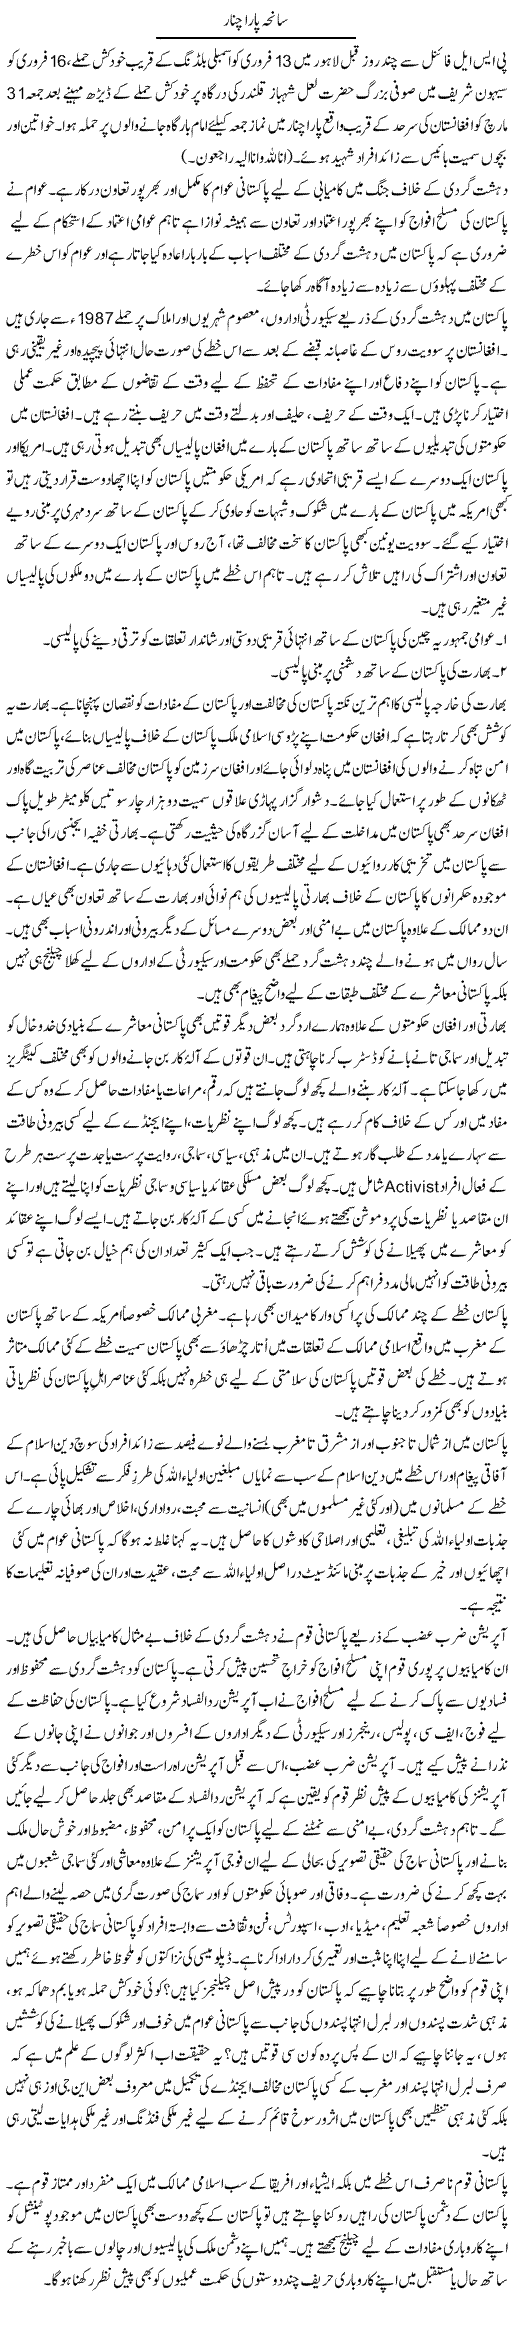 Saneha Parachinar | Dr. Waqar Yousuf Azeemi | Daily Urdu Columns